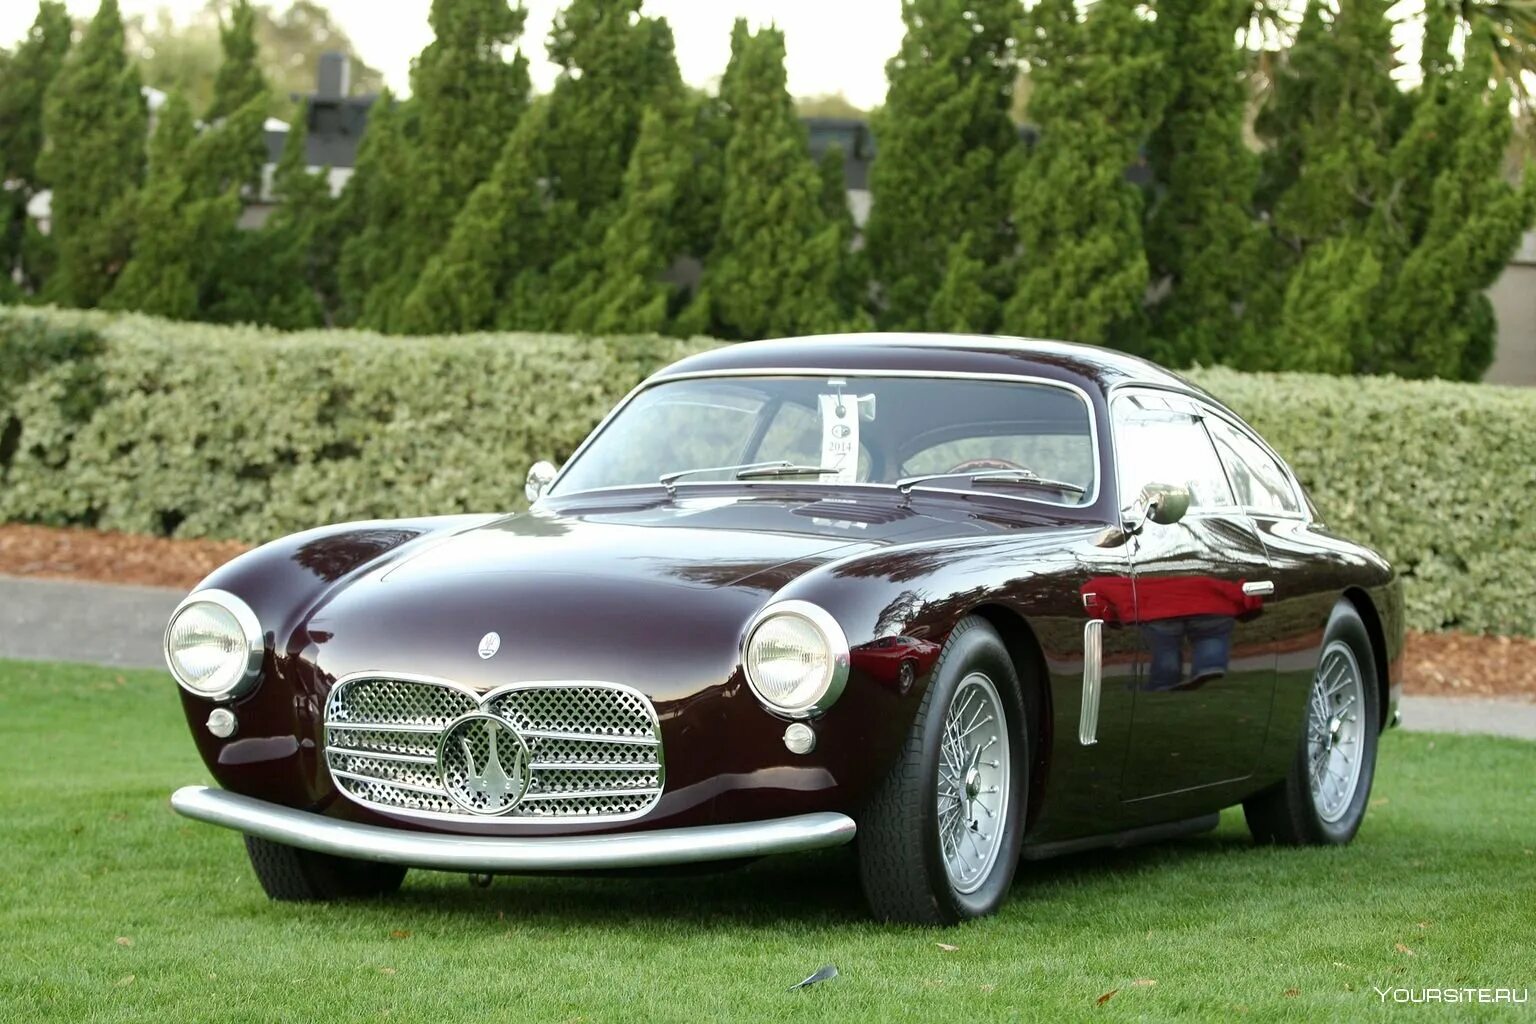 Дорогой старый автомобиль. Maserati a6g. Мазерати 2000. Maserati a6g 1955. Maserati a6 1500 gt.